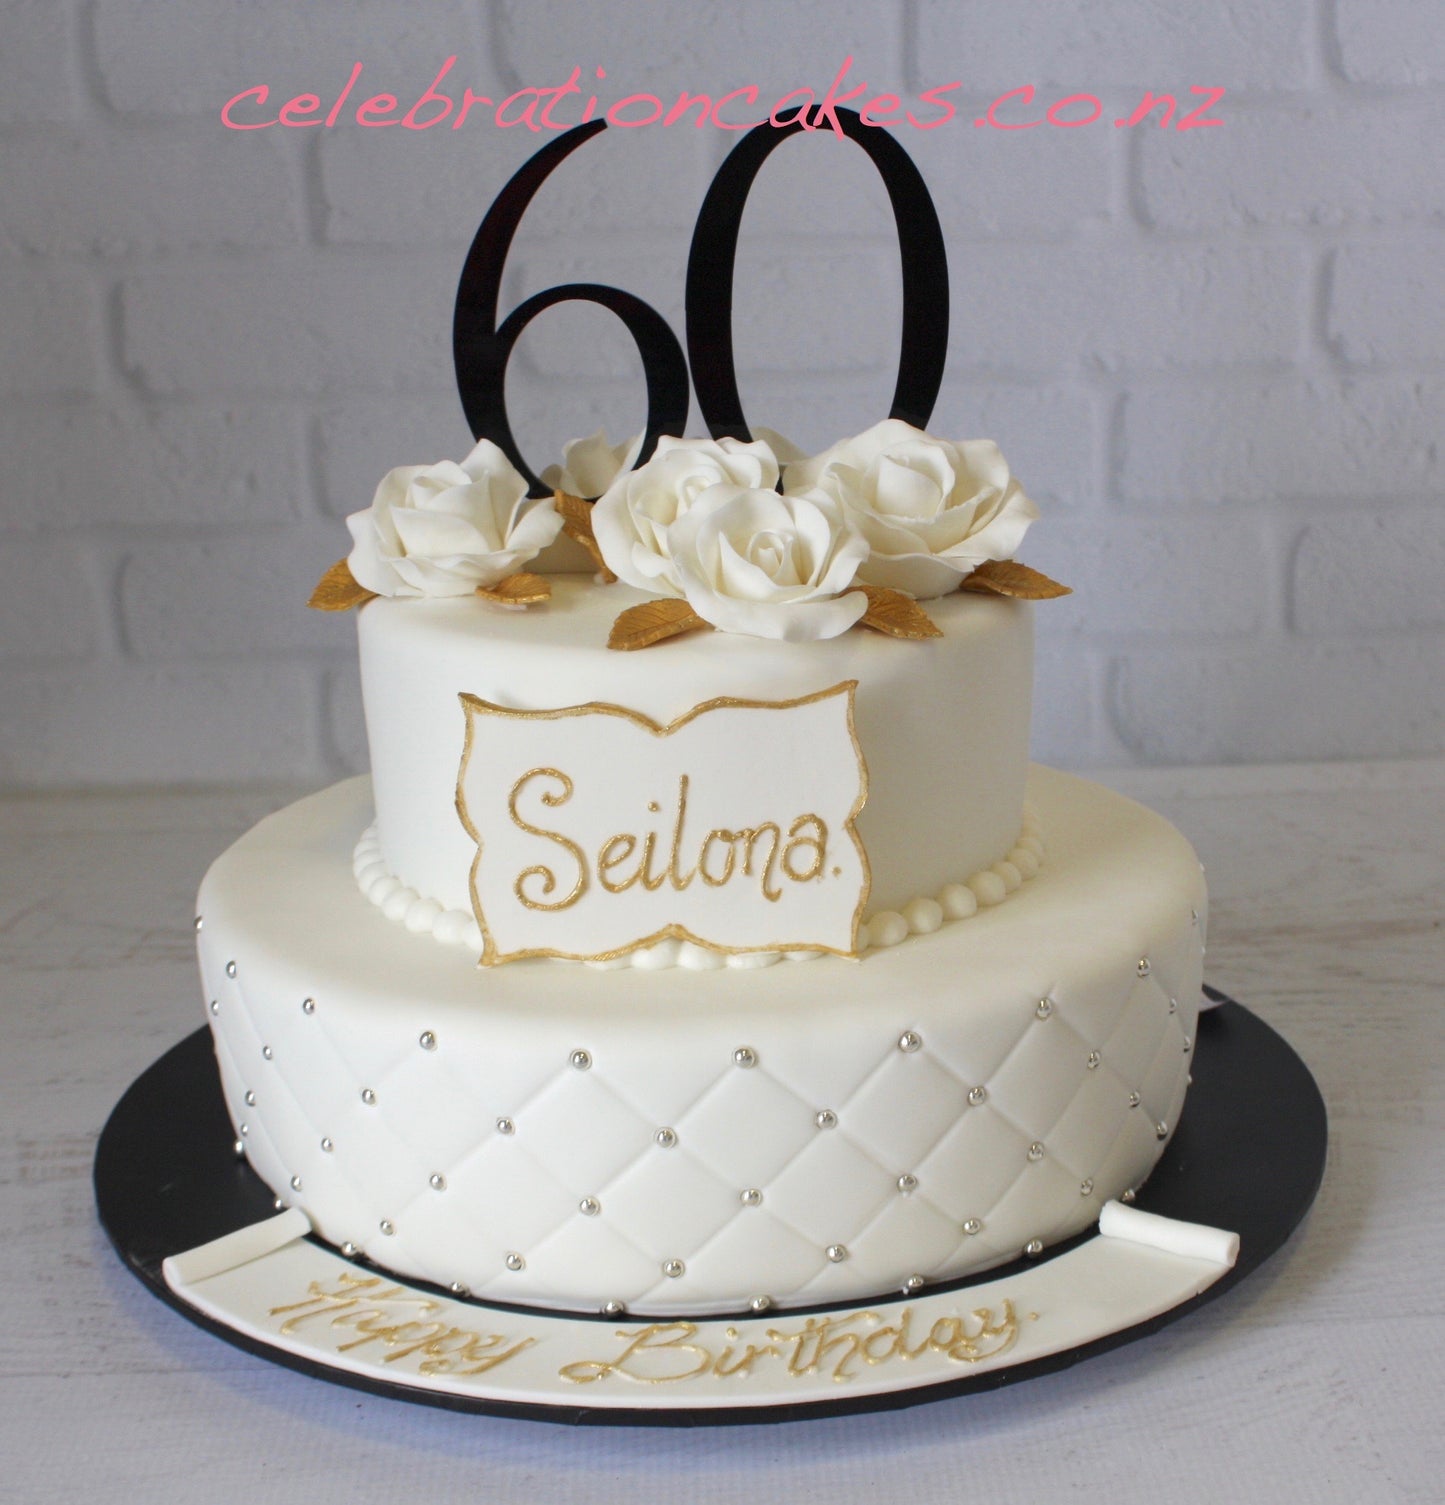 60th Birthday Cakes - Quality Cake Company - Tamworth